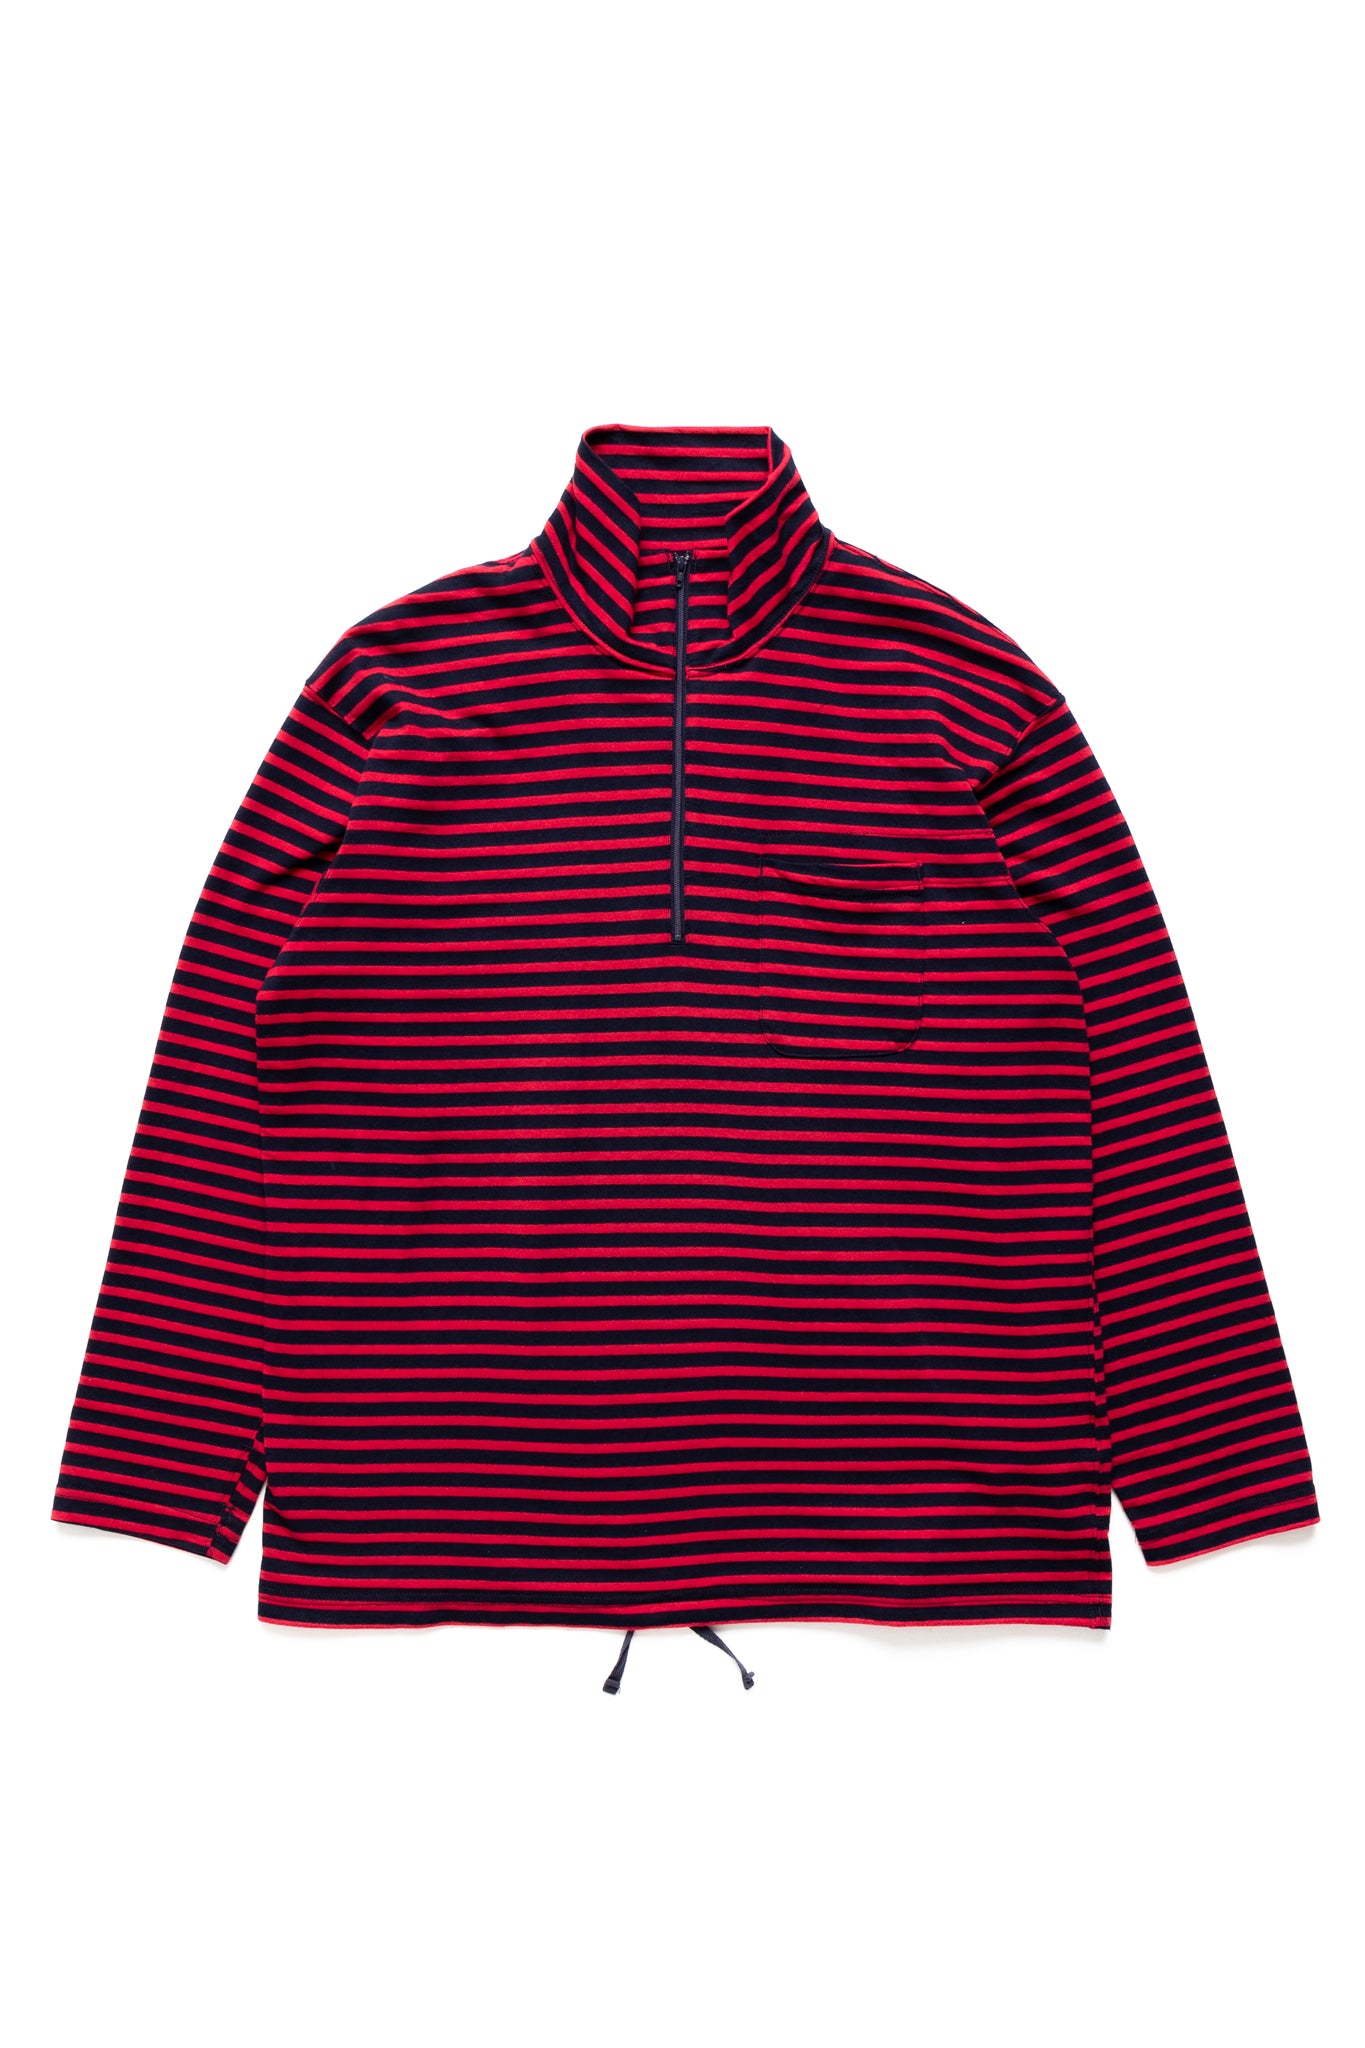 Zip Mock Neck PC Stripe Jersey - Red/Navy